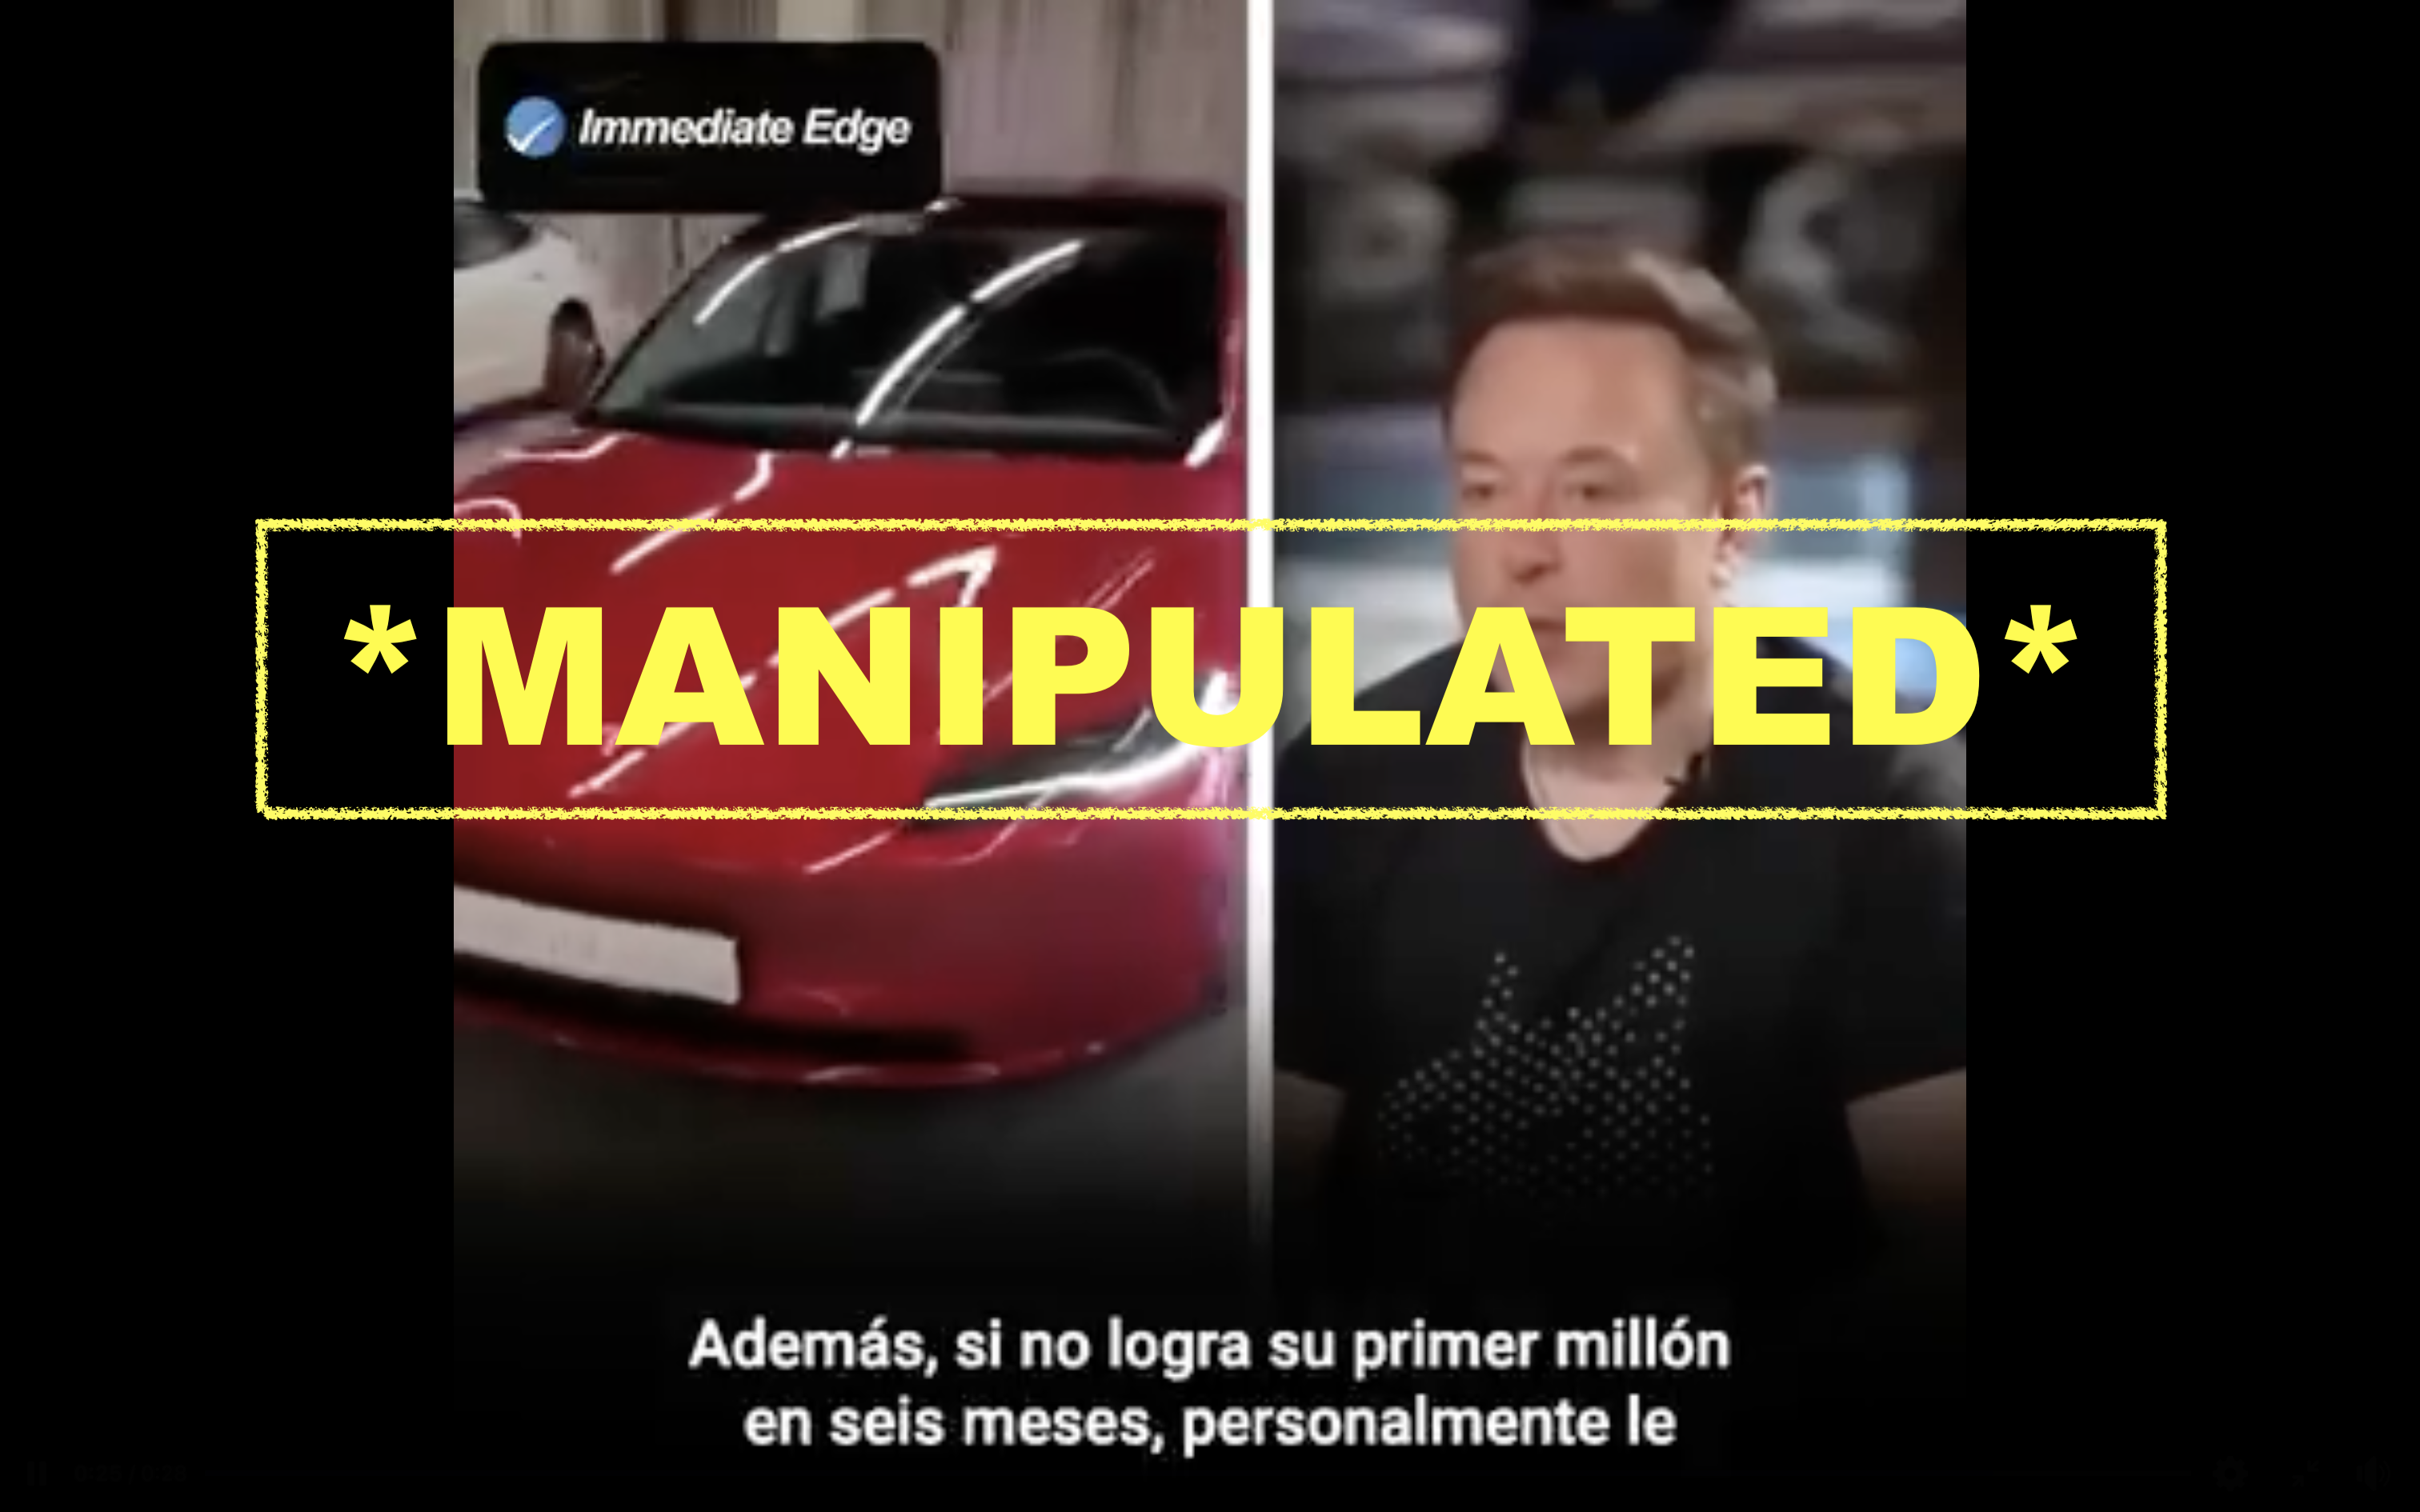 Spanish-language ads amplify scams using audio deepfakes of public figures